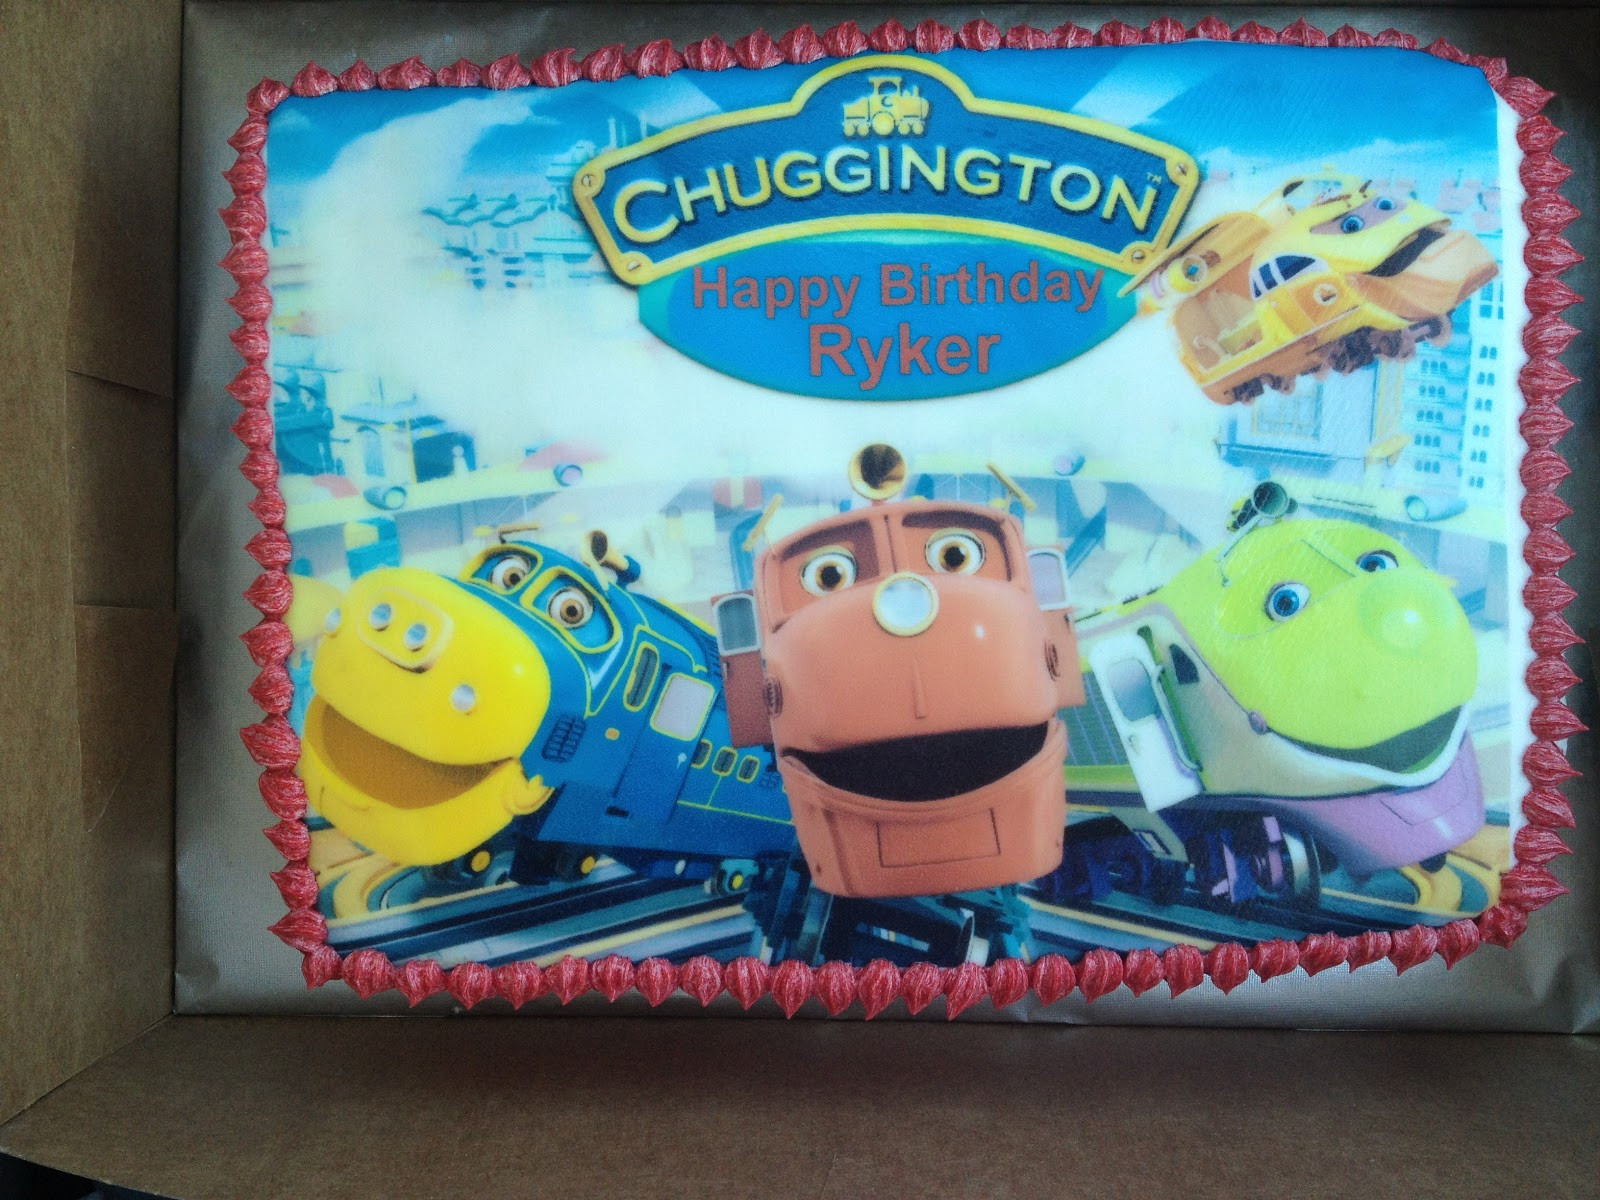 Chuggington Birthday Cake
 Chelle s Sweet Delights Chuggington Birthday Cake